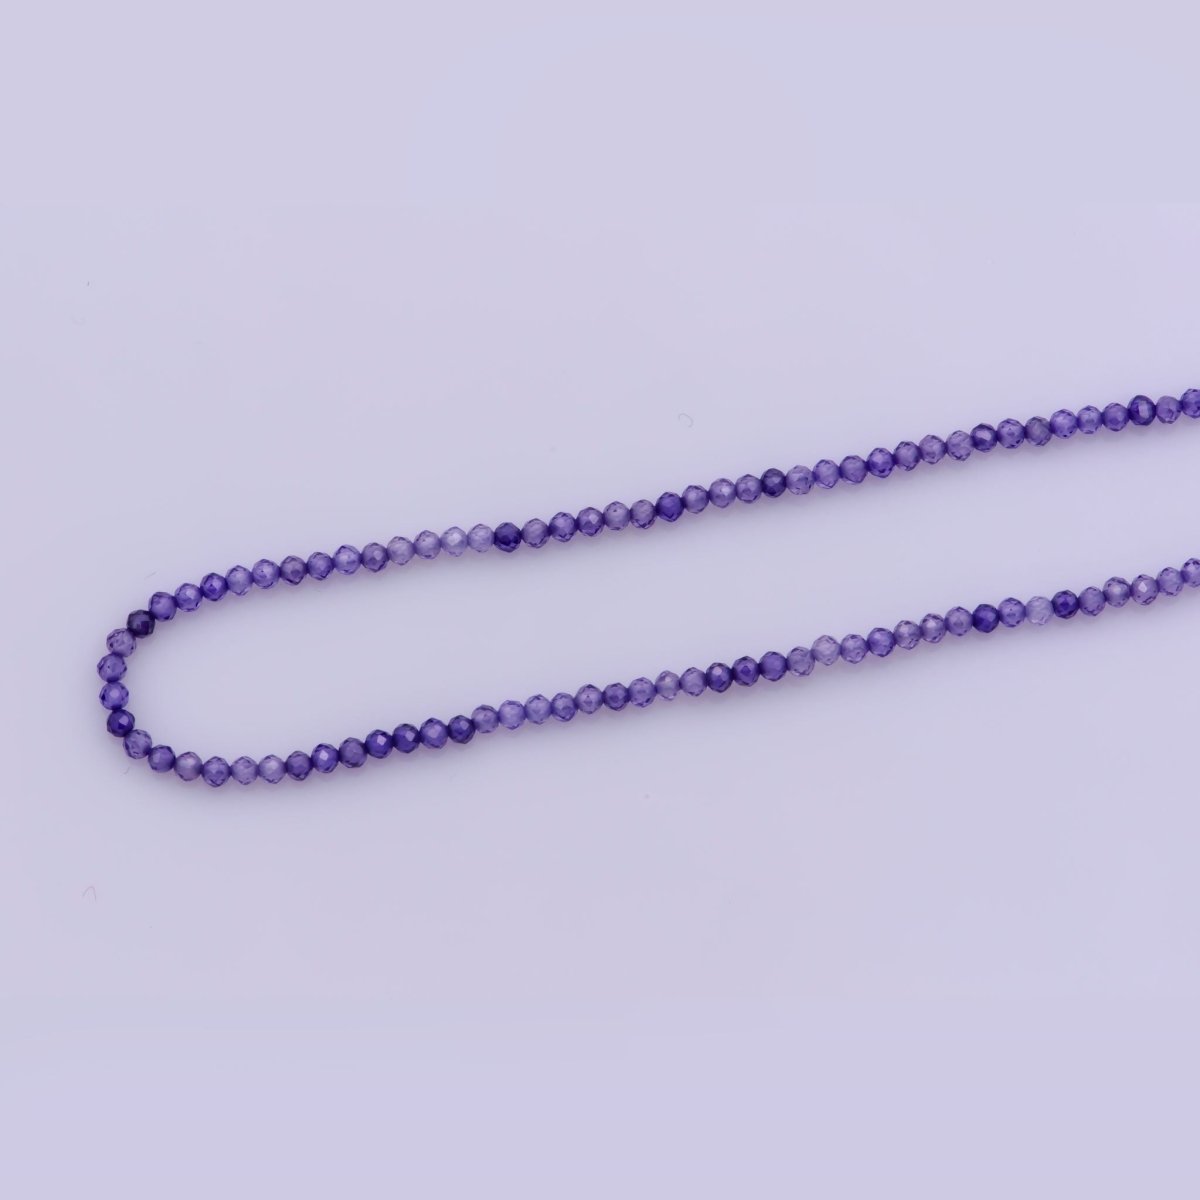 Purple Amethyst Necklace, Amethyst Bead Necklace, Amethyst Jewelry, Amethyst Crystal Necklace, Gemstone Necklace, Amethyst 17" Necklace | WA-323 Clearance Pricing - DLUXCA